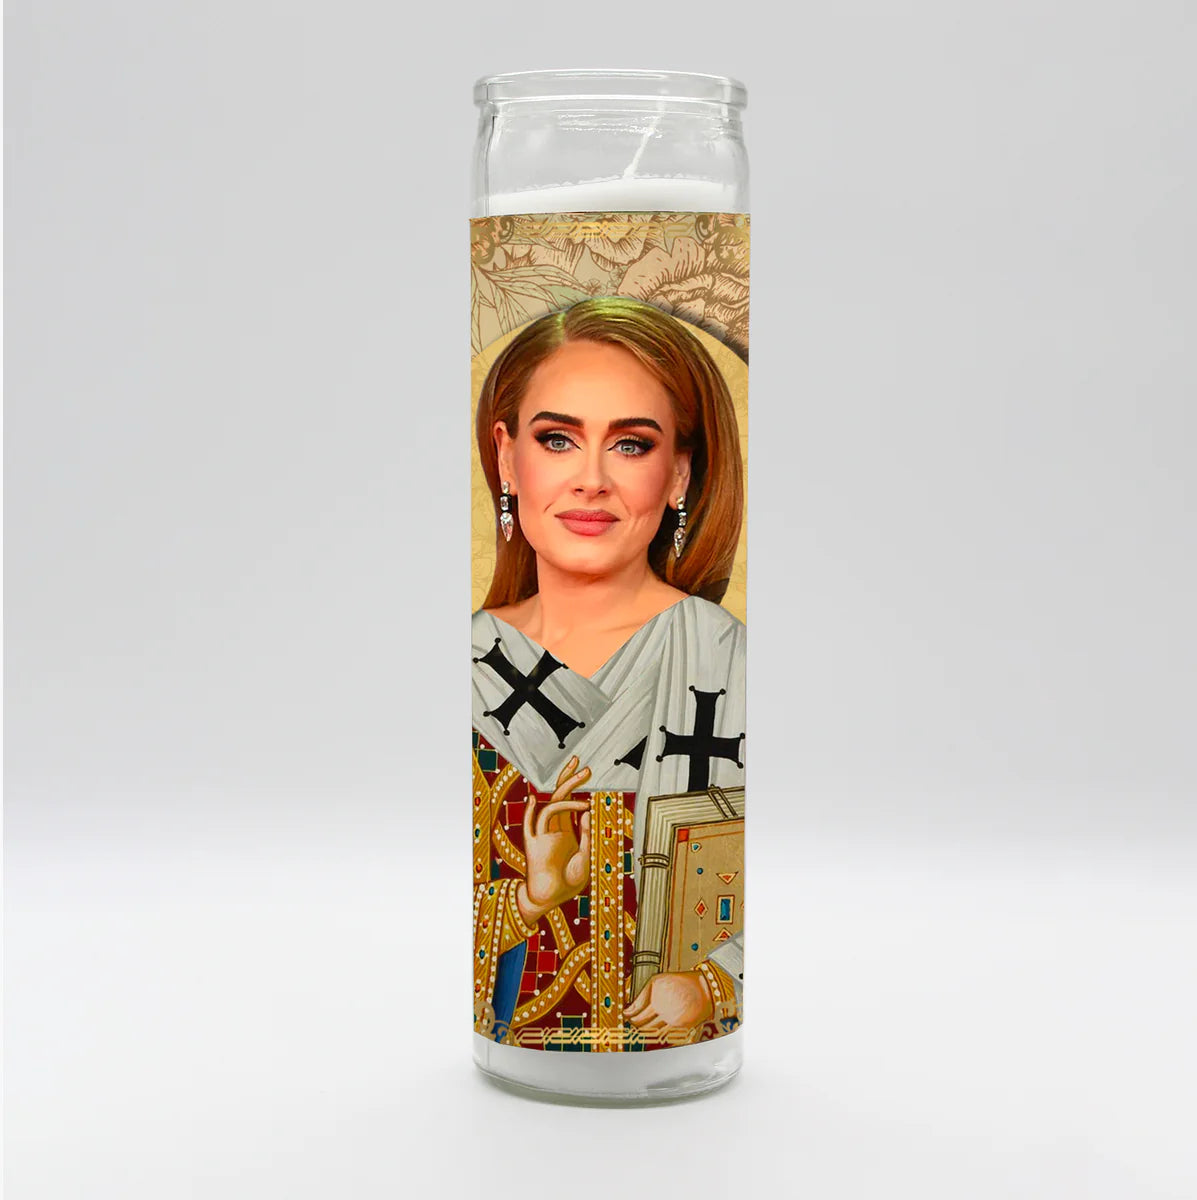 Celebrity Prayer Candle - Adele Adkins